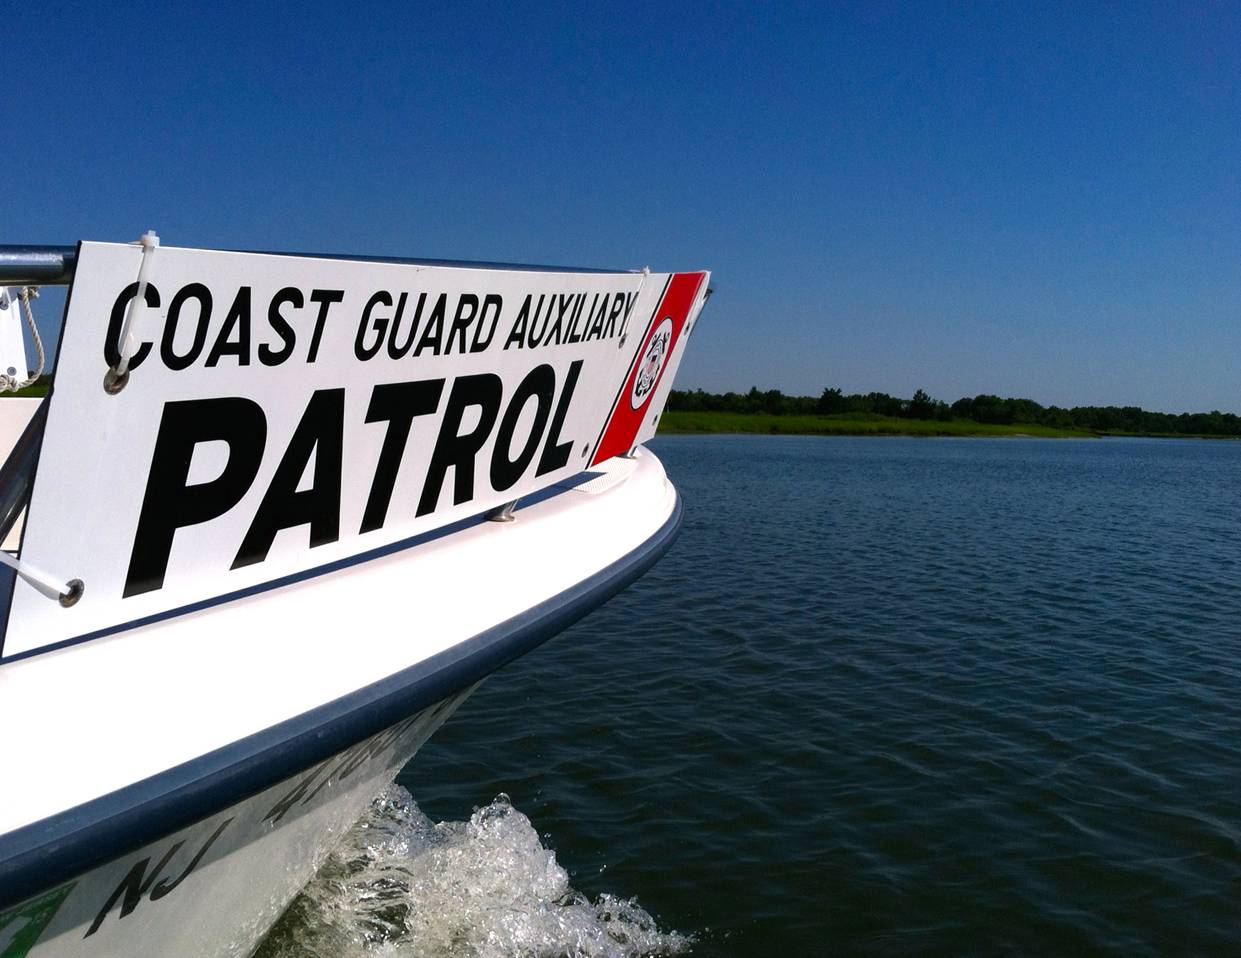 CGA boat on patrol